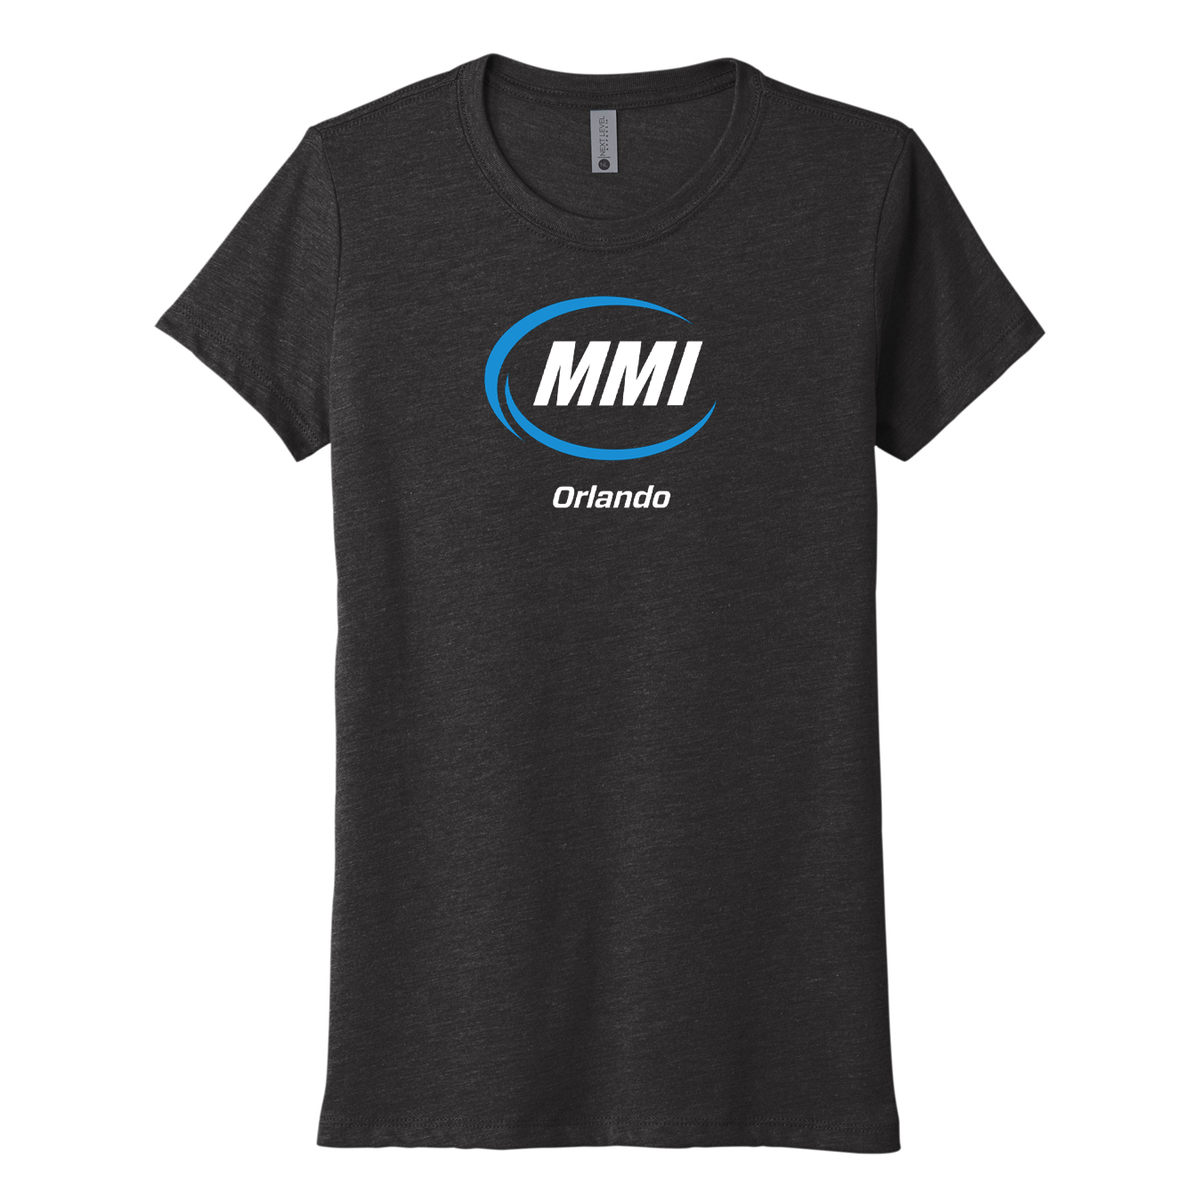 MMI (Marine) Orlando Campus Womens T-Shirt